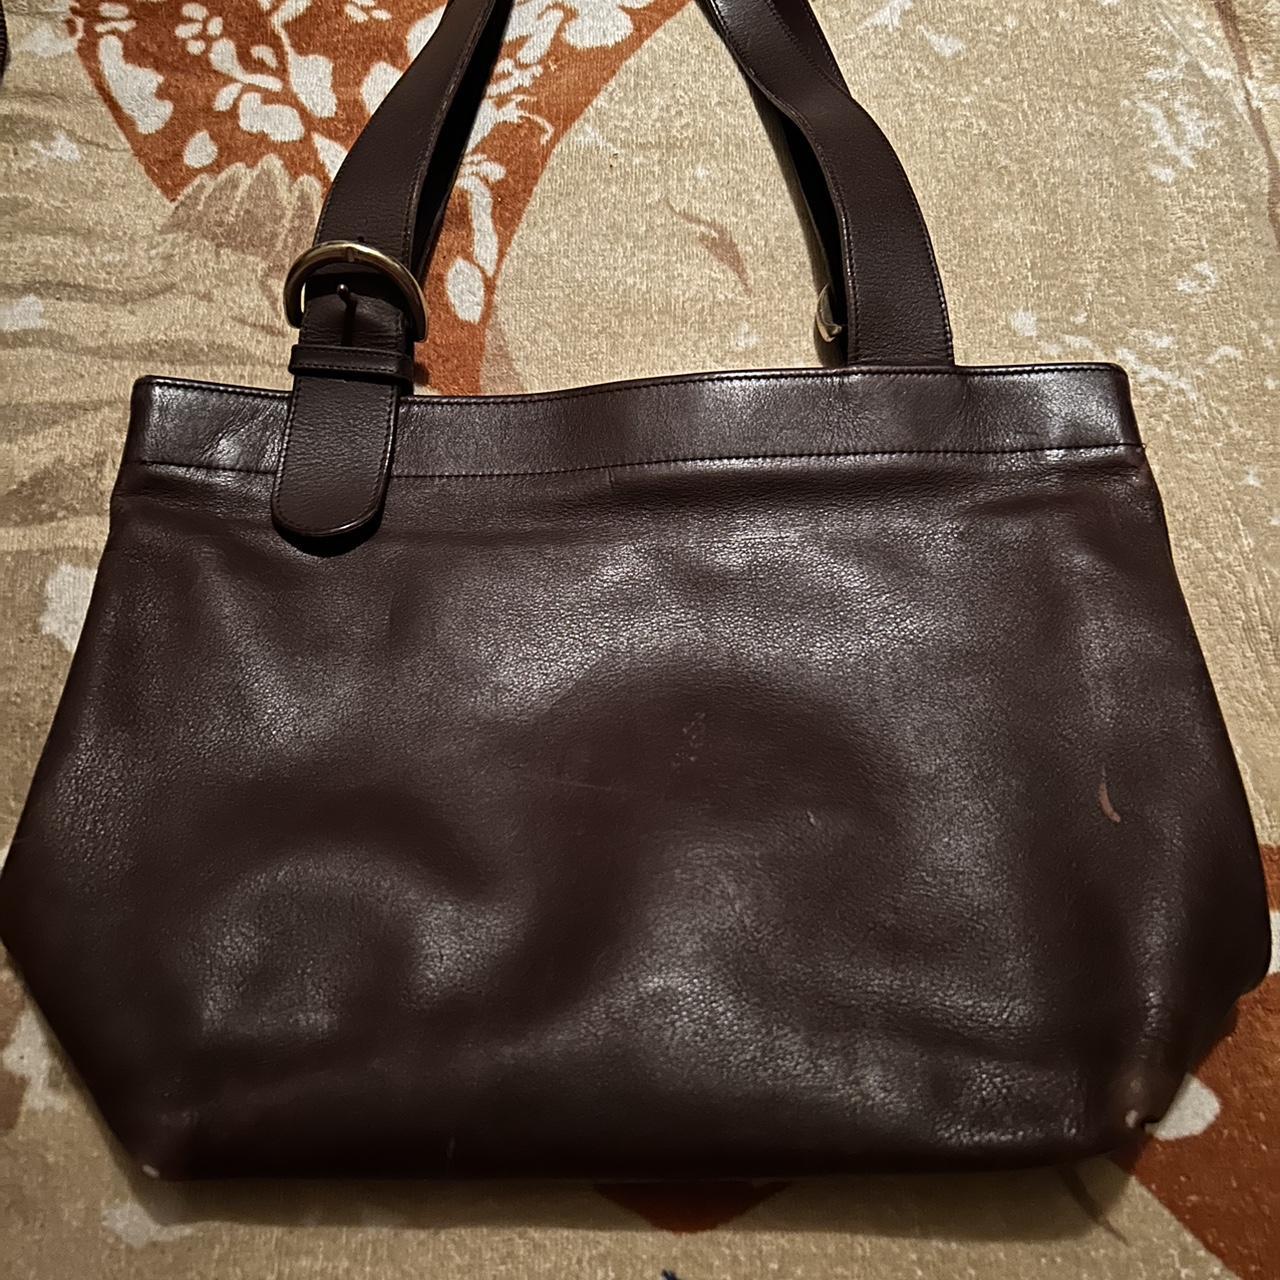 What brand of handbag should I buy for my wife: Coach, Furla, or Michael  Kors? - Quora